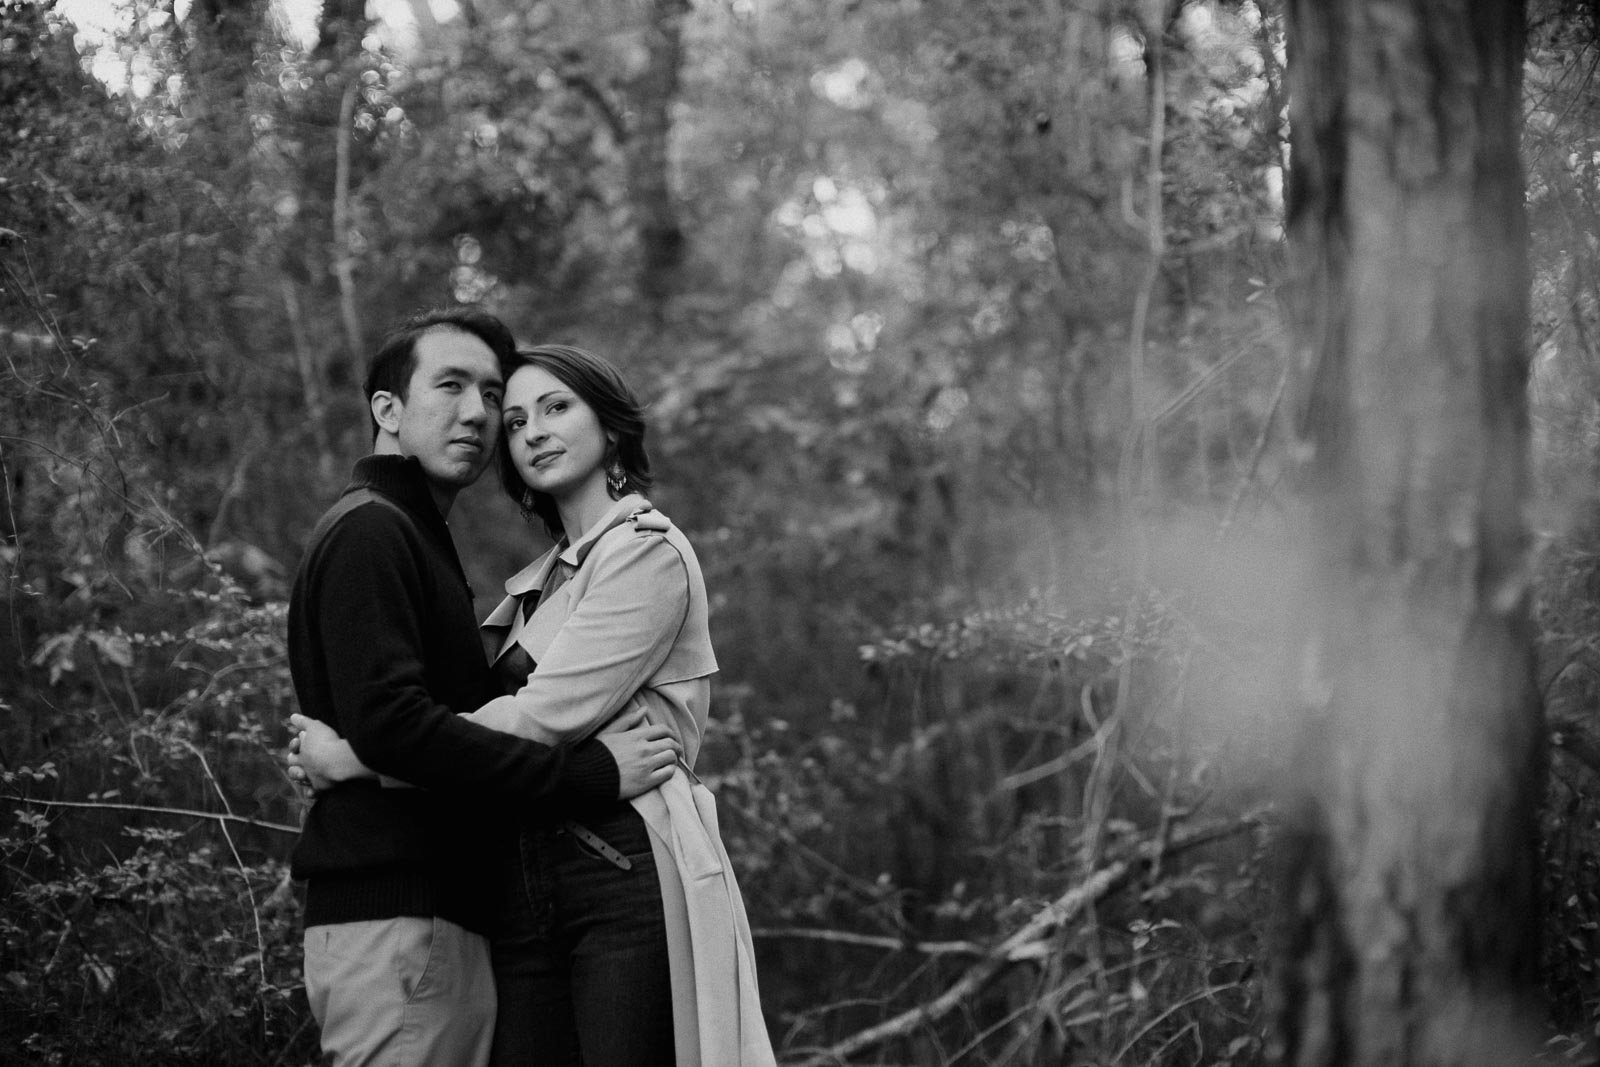 Engagement session in Hurst Texas- Texas Leica Wedding Photographer-- Philip Thomas